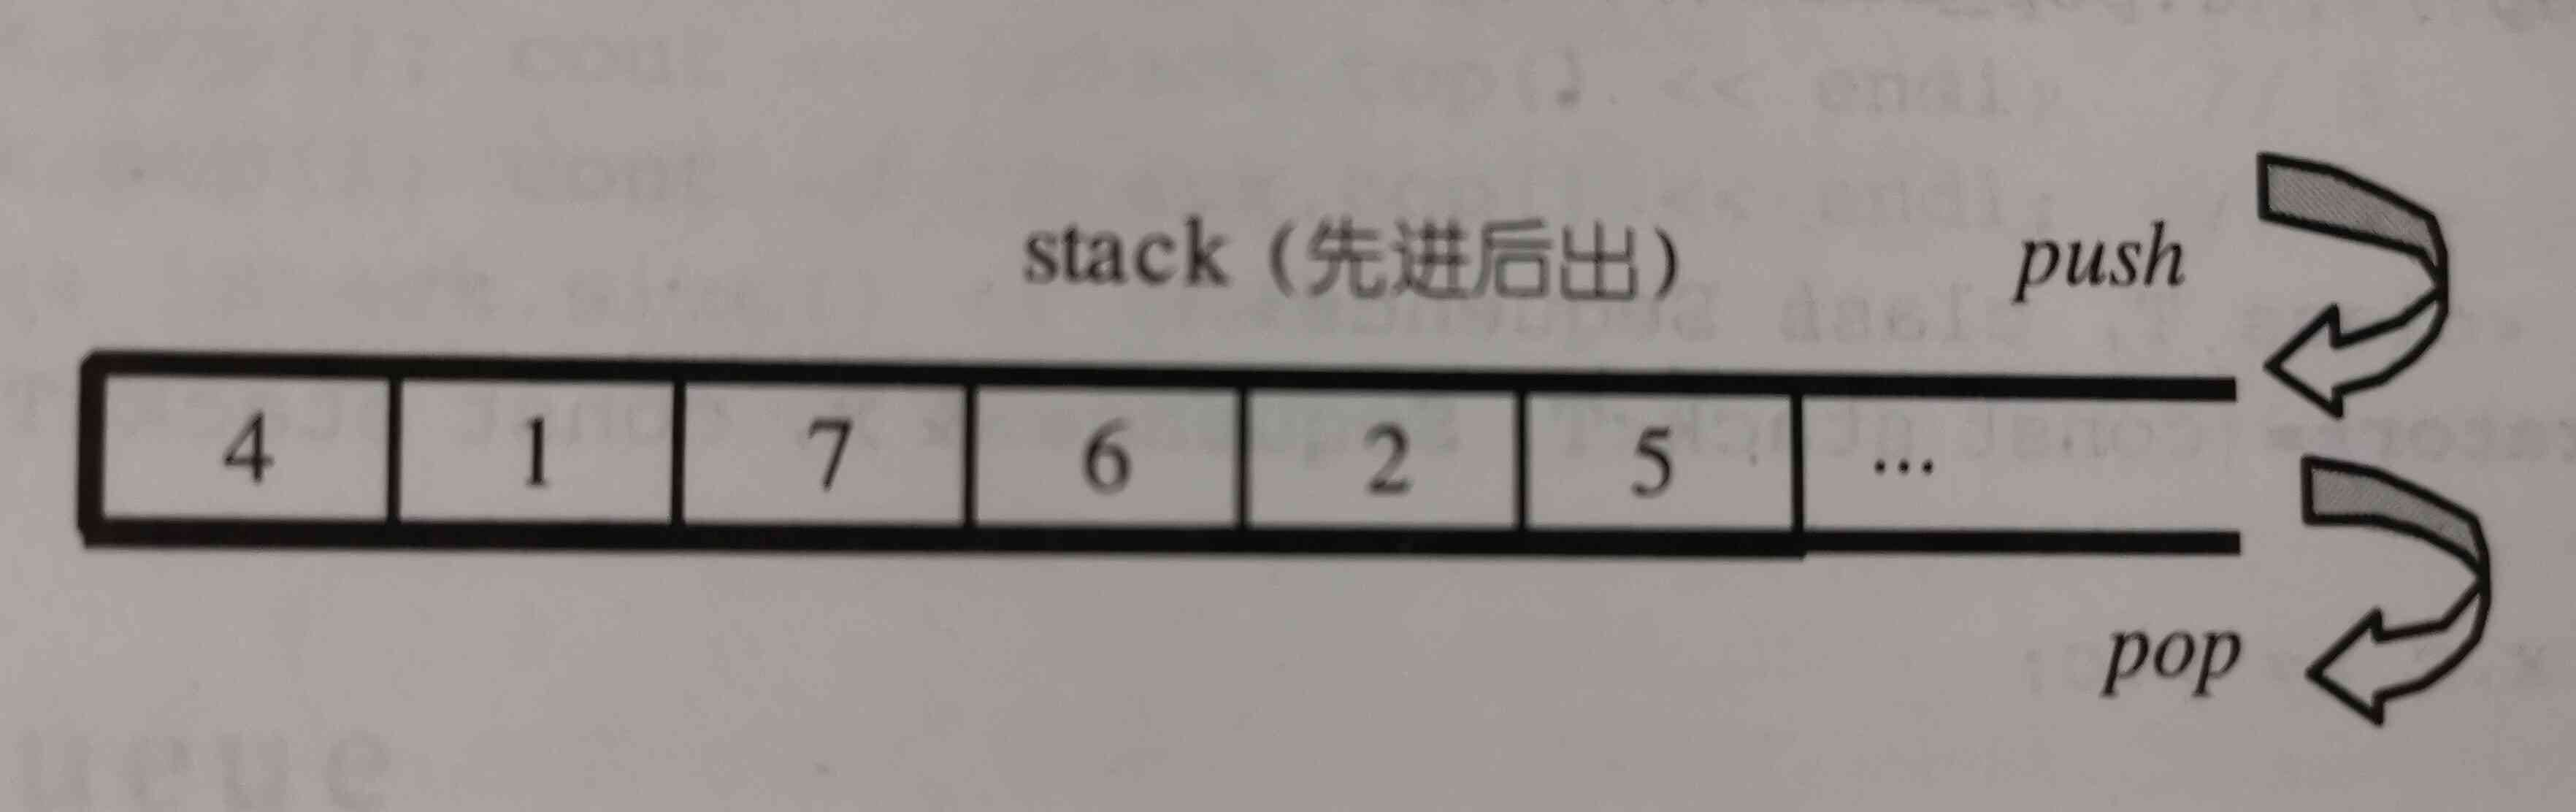 stack.jpg